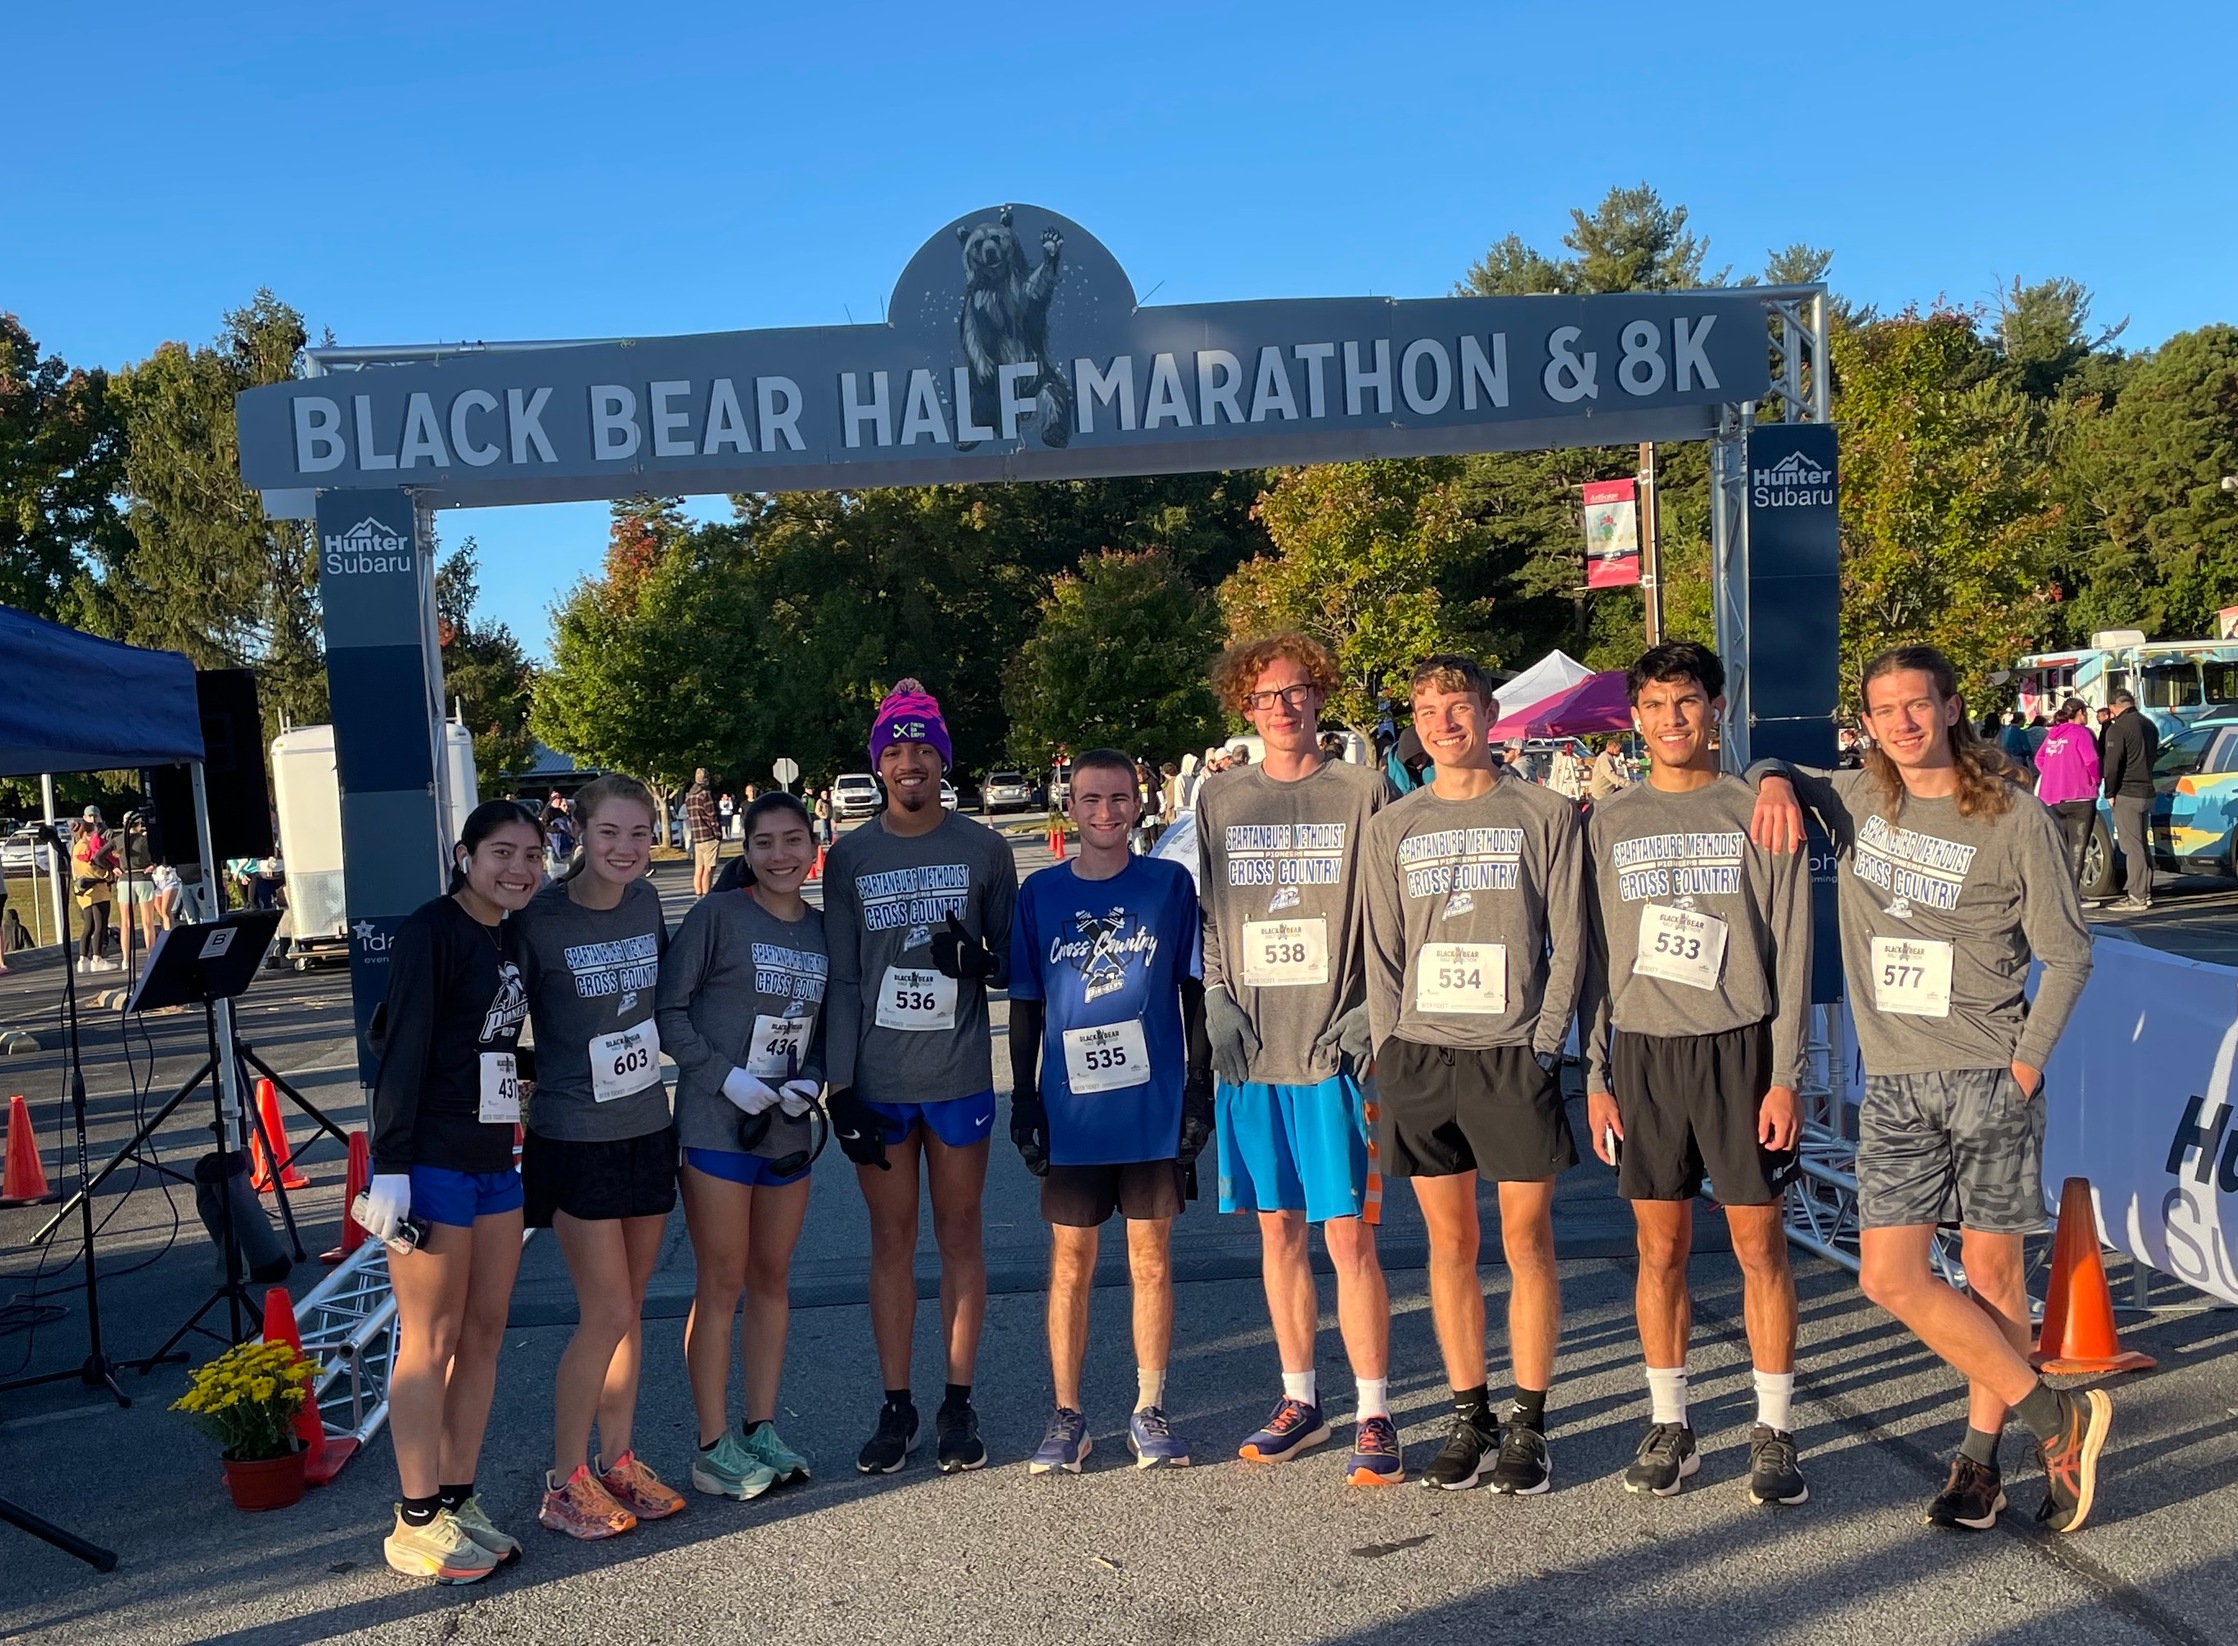 Black Bear Half Marathon Joyful Experience for Pioneers